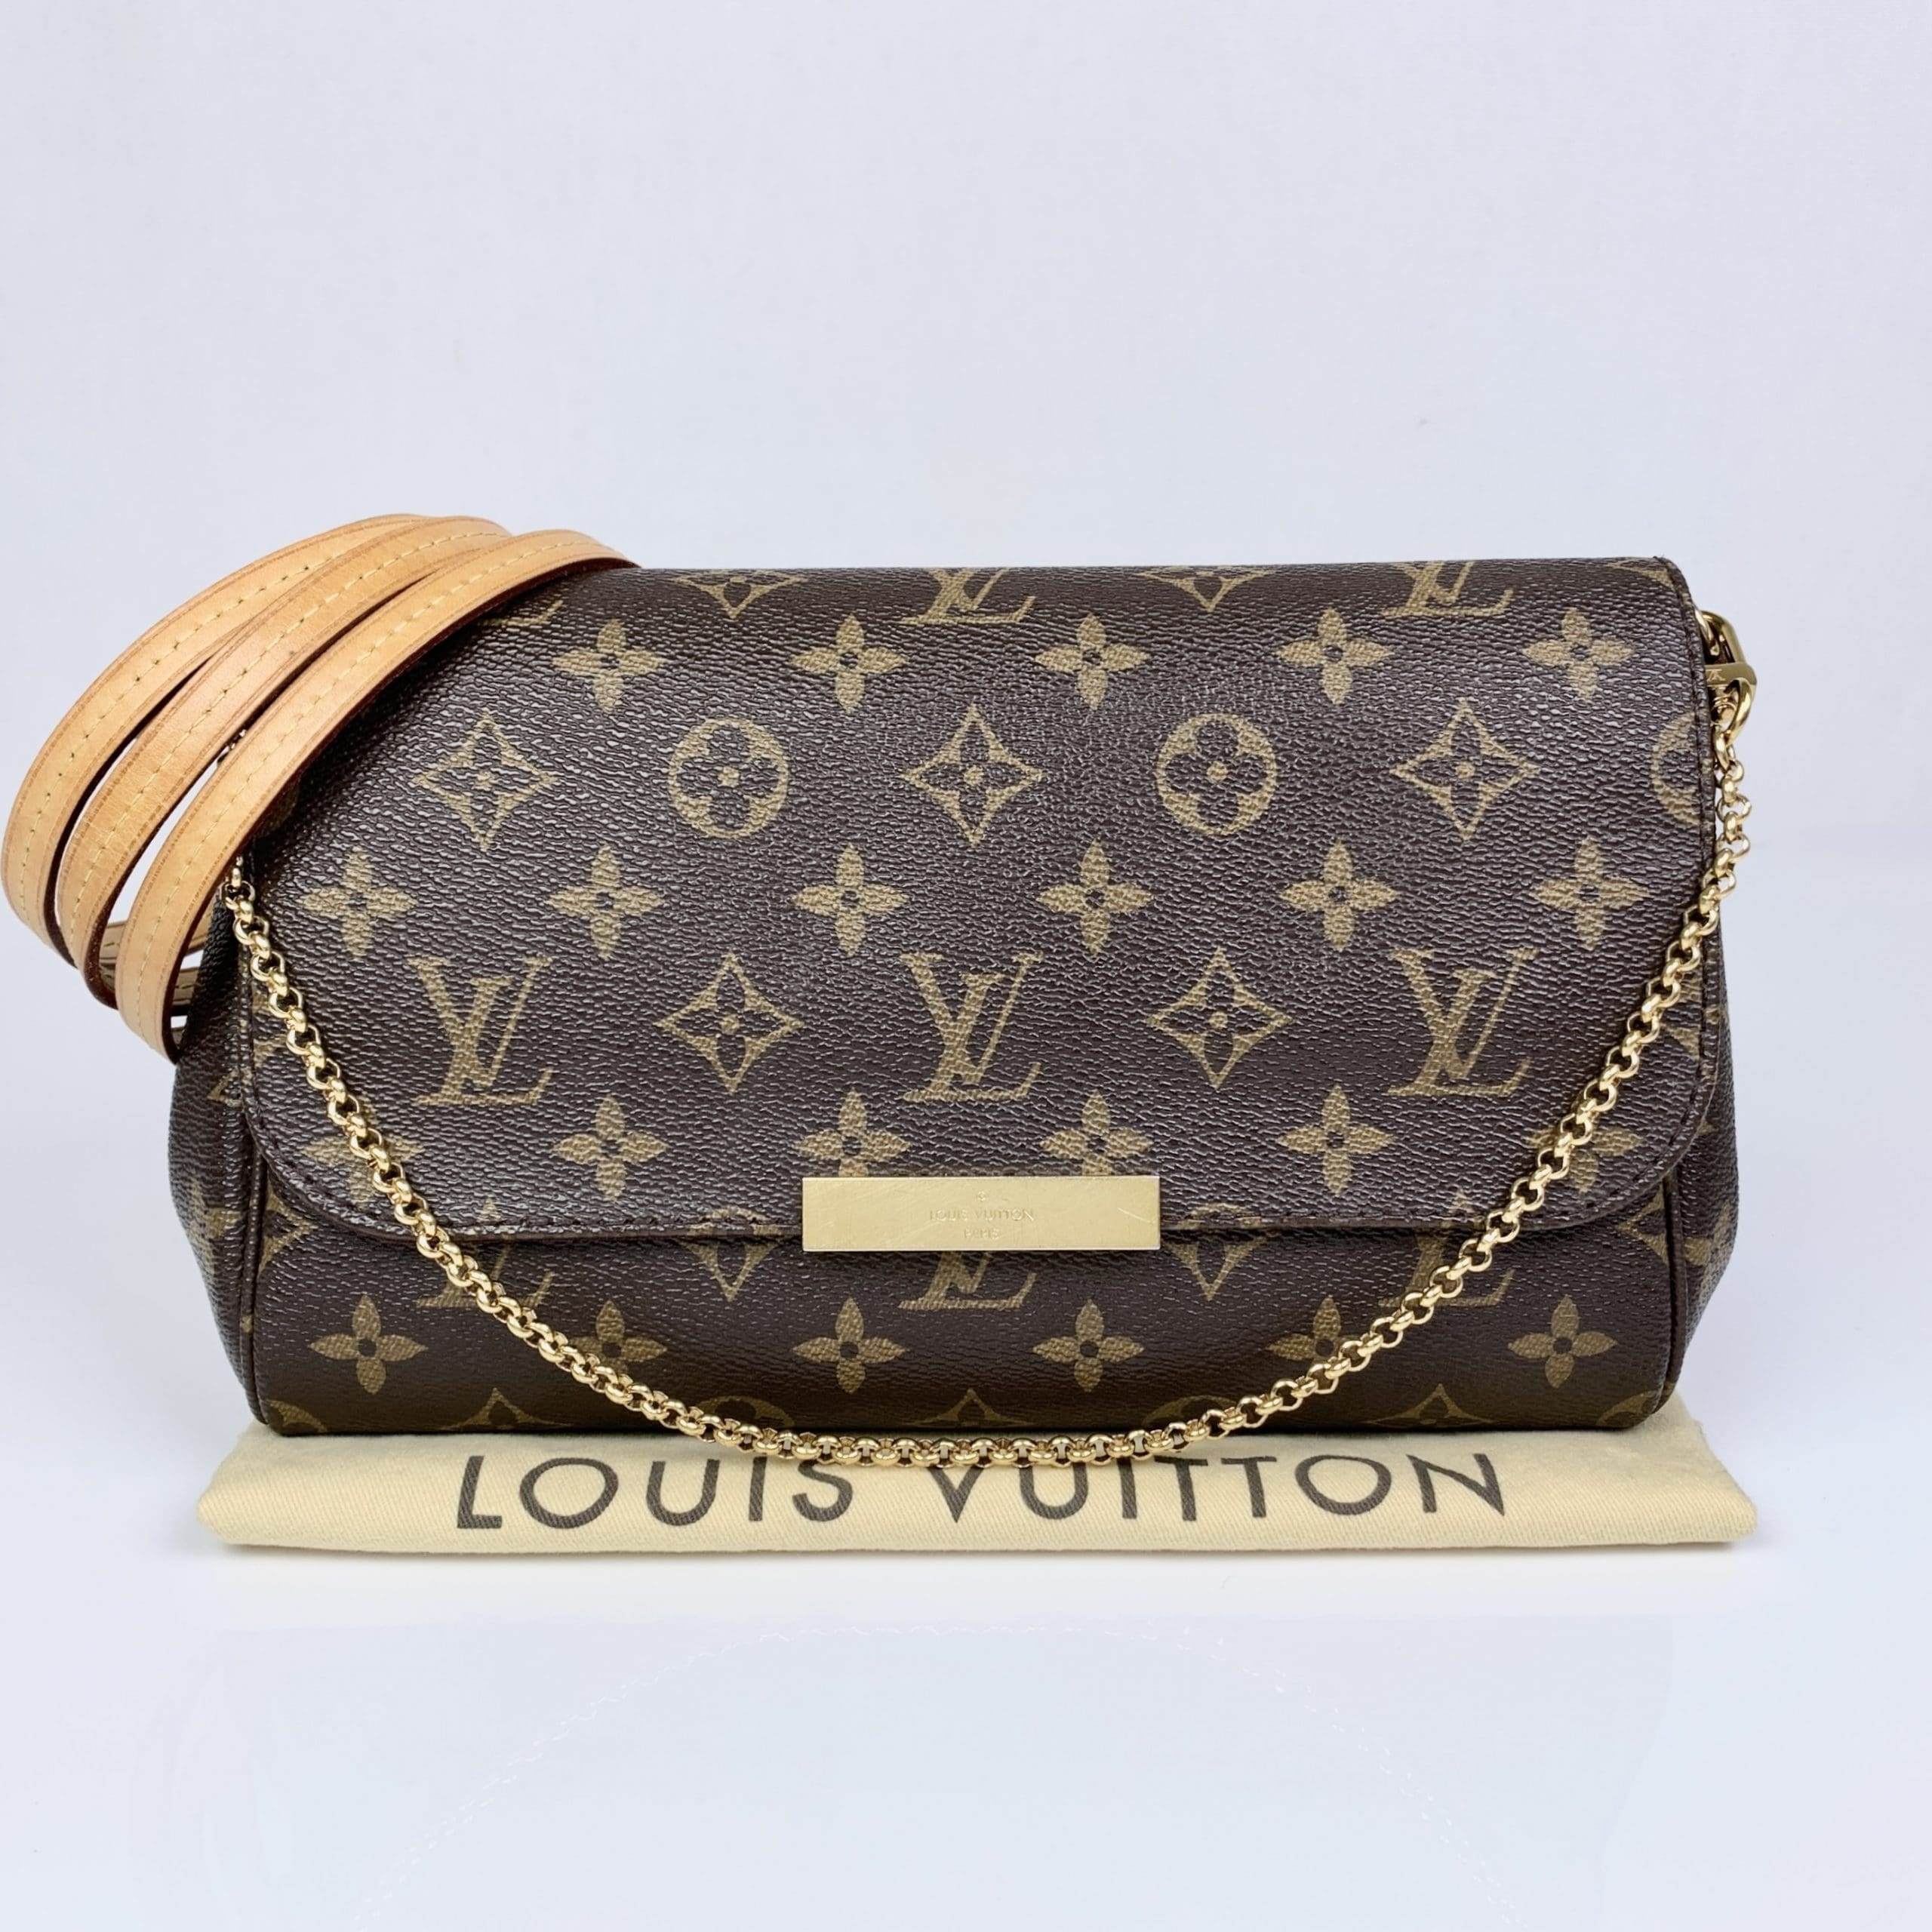 Authentic Louis Vuitton MM favorite models crossbody bags